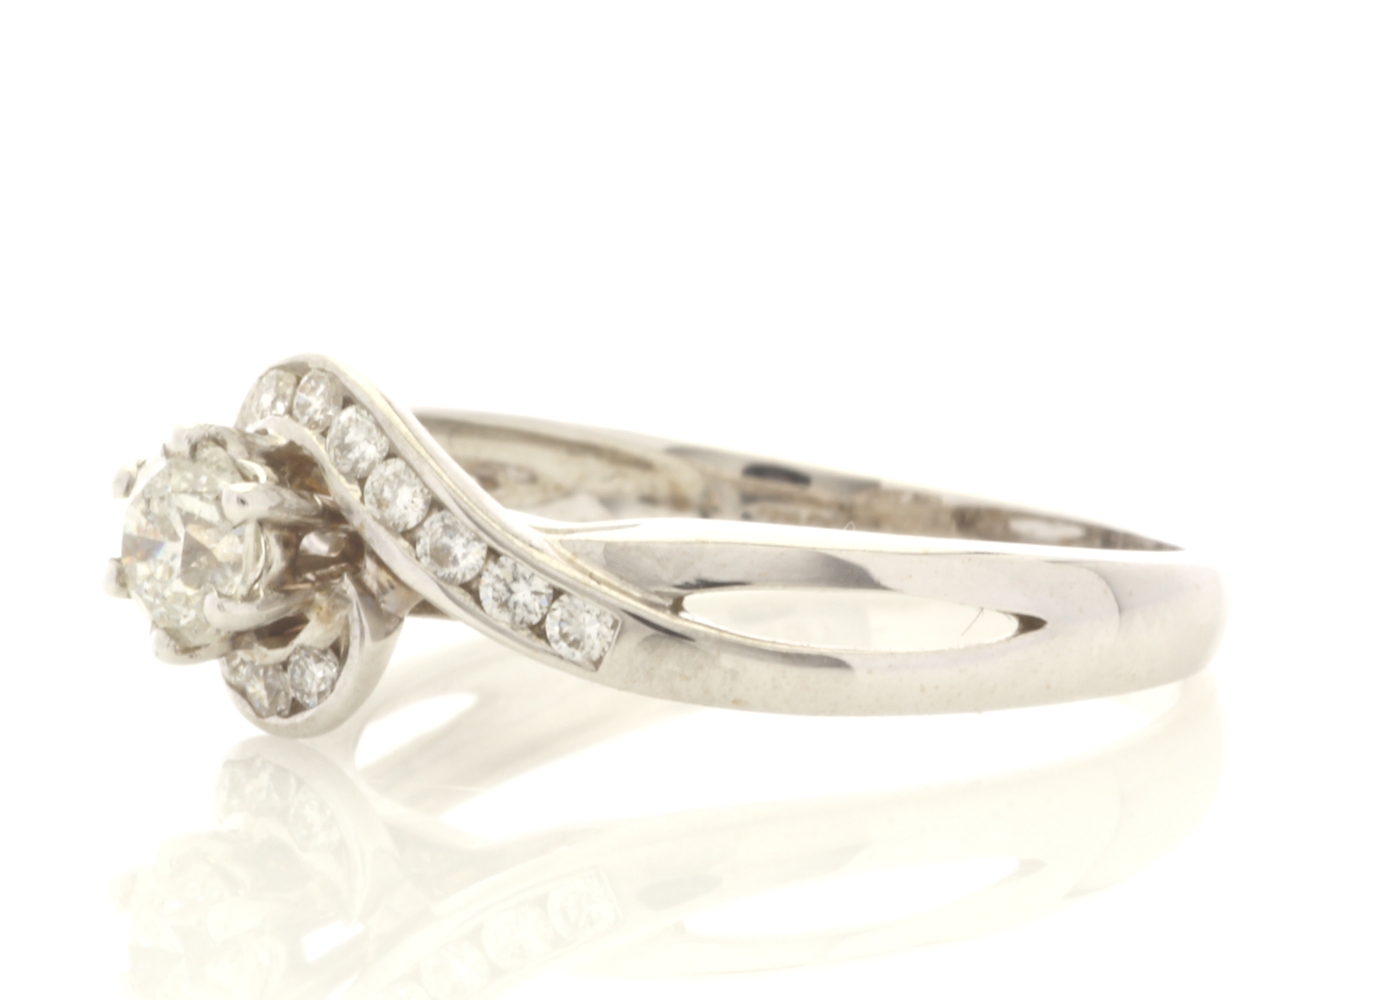 18ct White Gold Single Stone Prong Set With Stone Set Shoulders Diamond Ring 0.61 Carats - Image 2 of 5